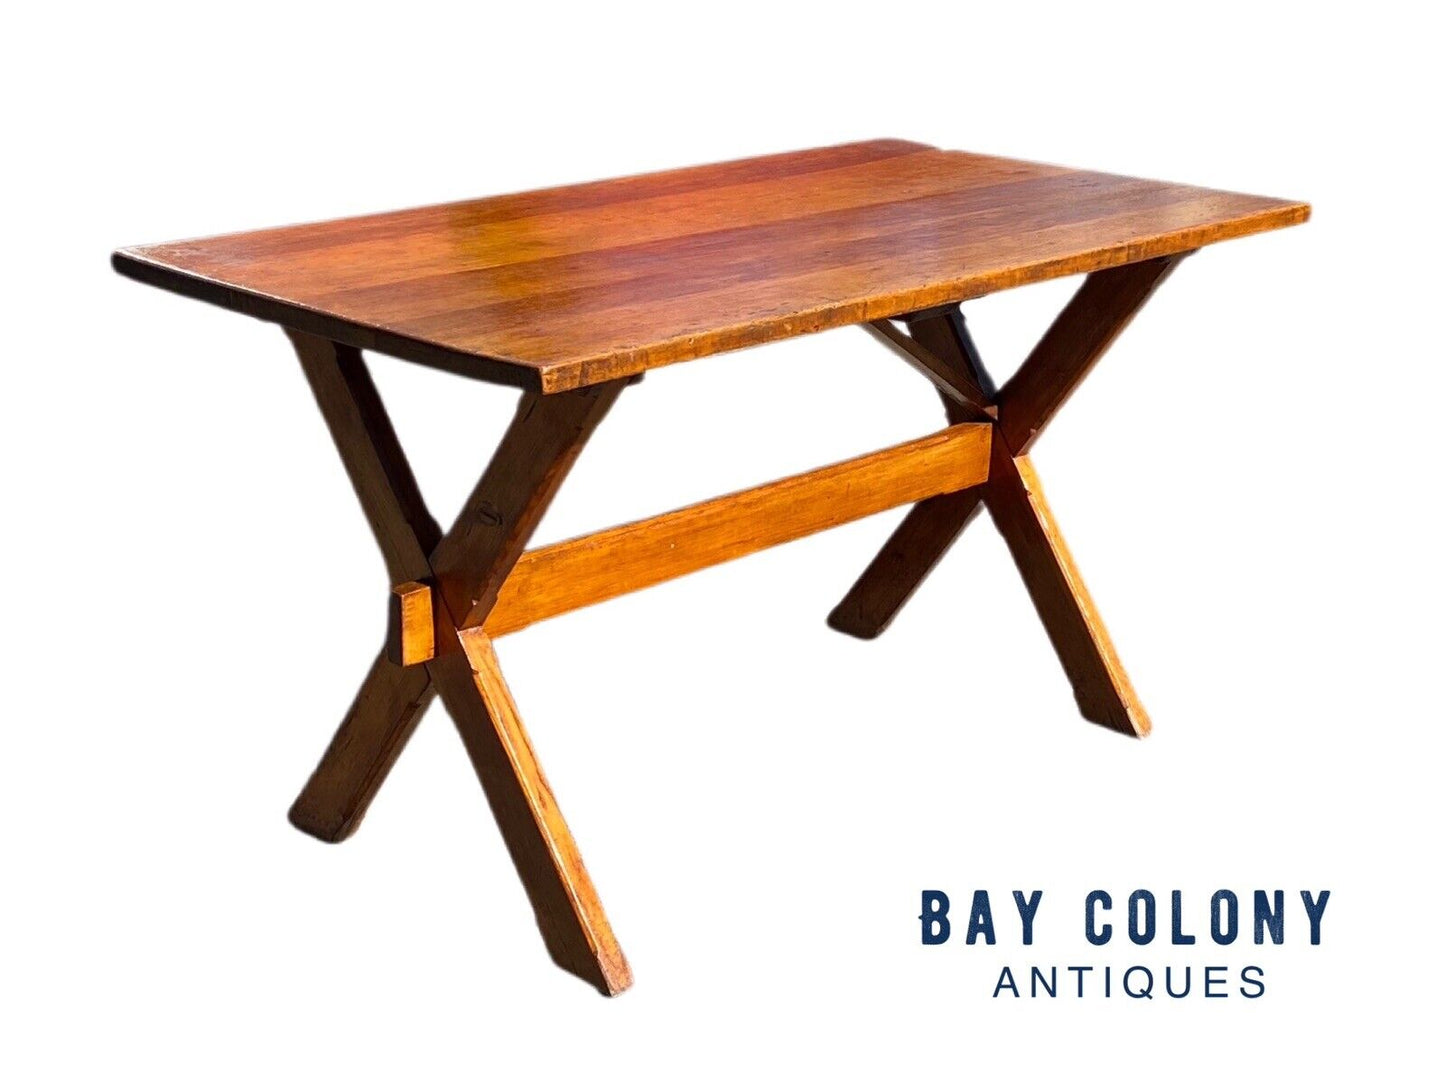 Vintage Farmhouse Style Pine Sawbuck Table / Primitive Dining Table